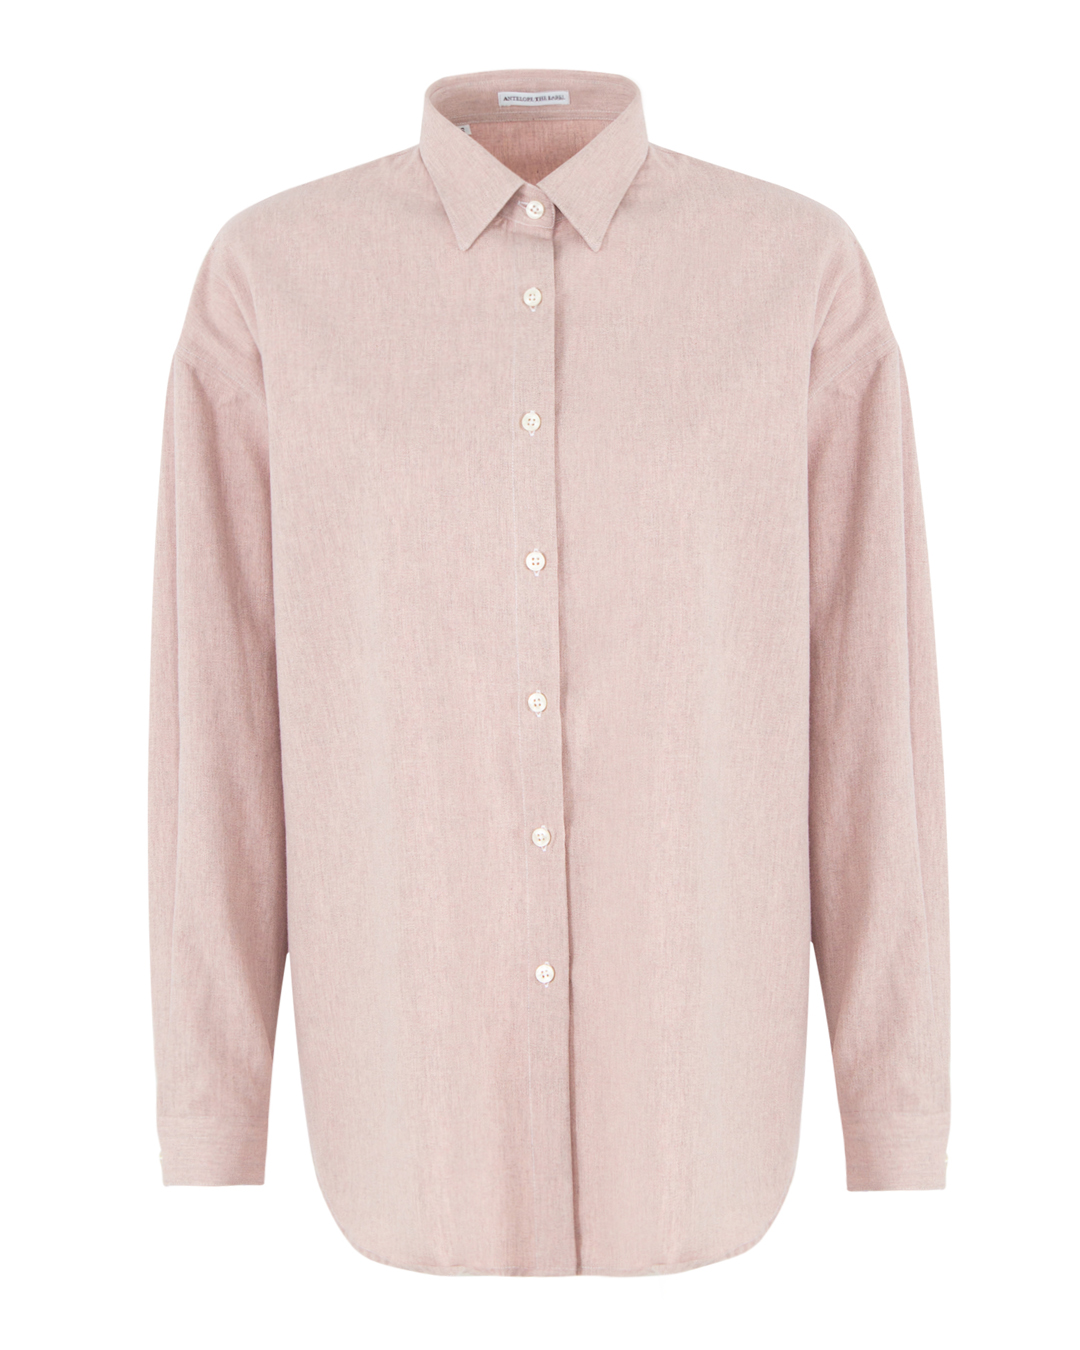 хлопковая рубашка ANTELOPE THE LABEL A2.822 св.розовый l, размер l - фото 1